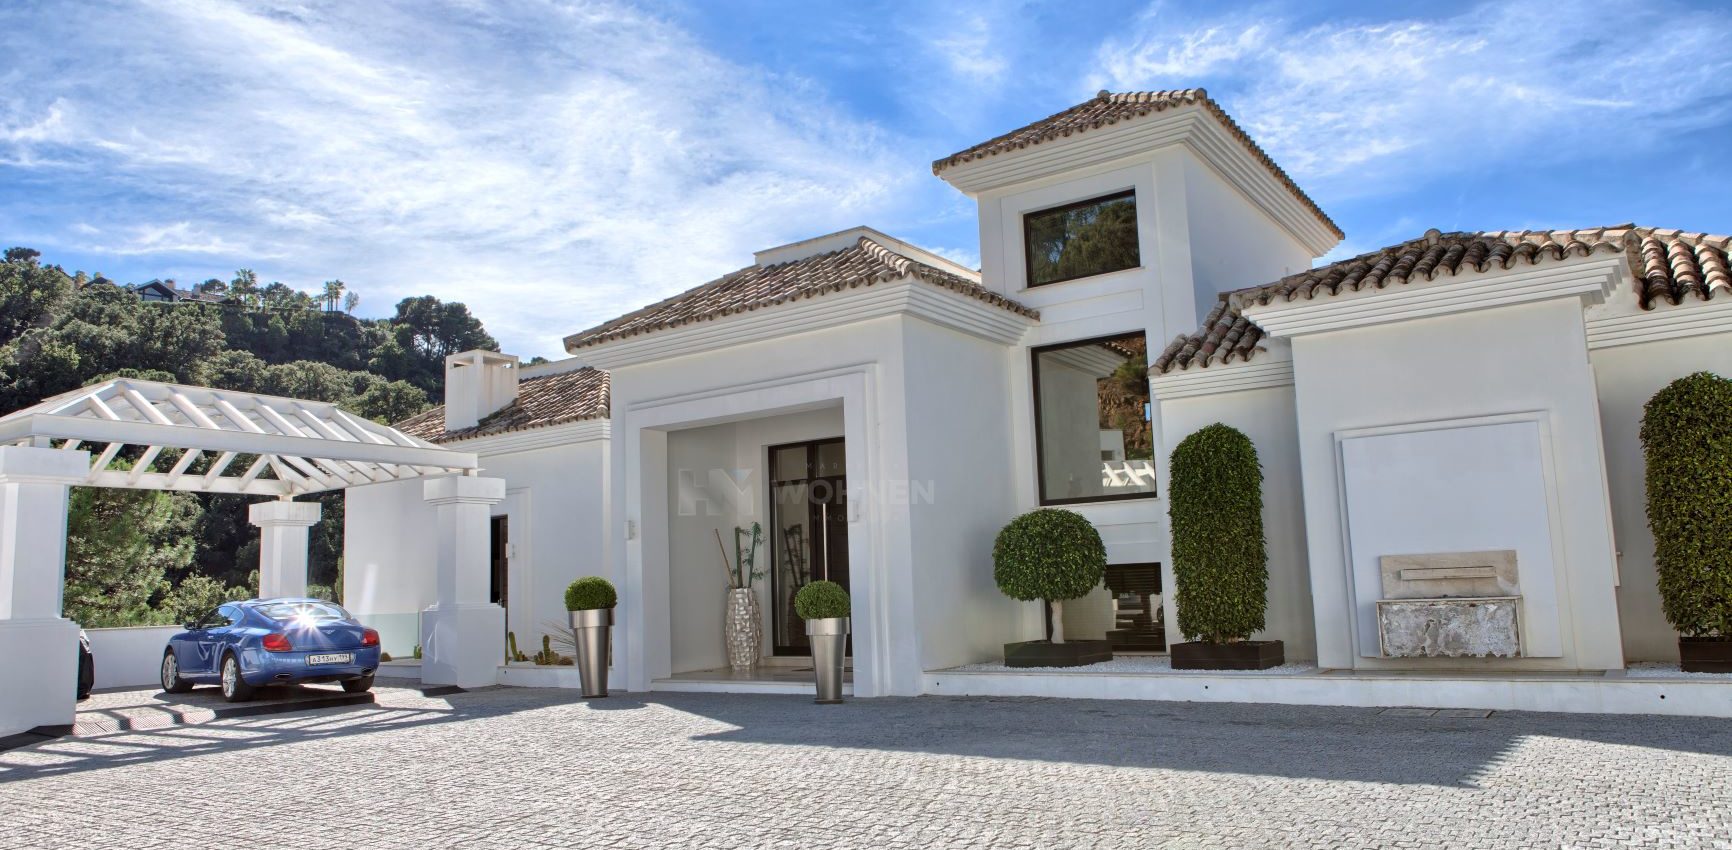 Contemporaty quality villa with spectacular views in La Zagaleta